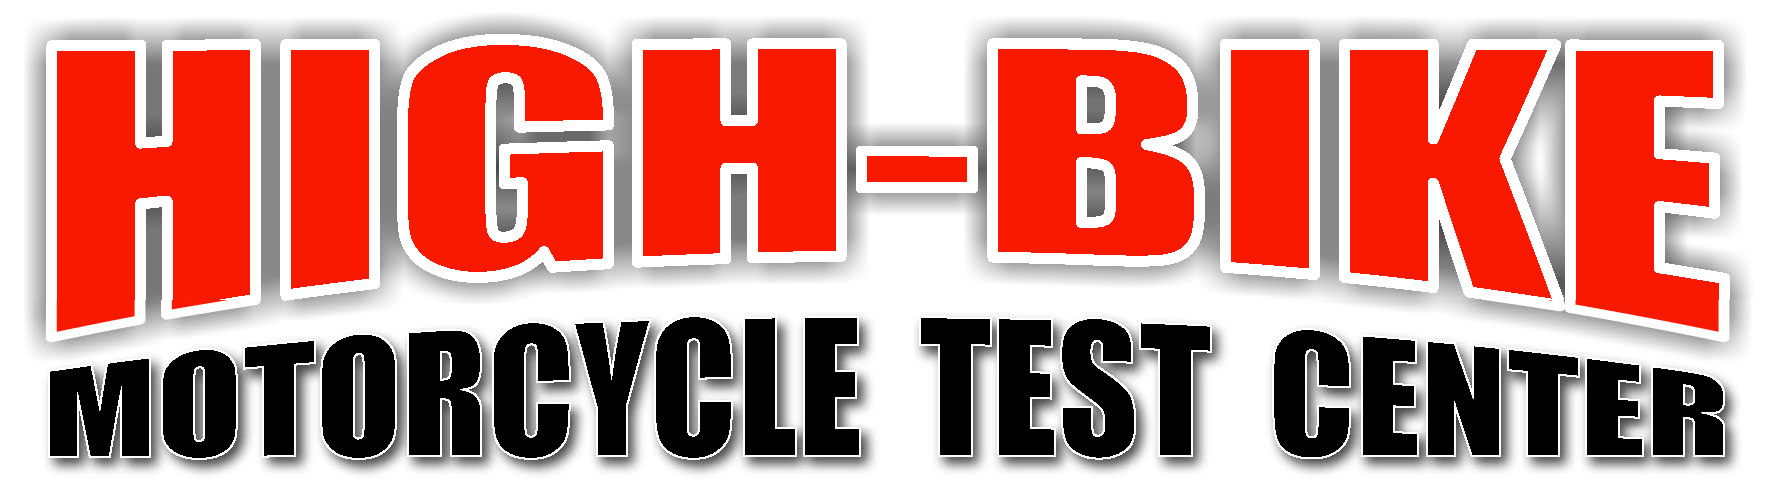 Logo HighBike 2021 Onlineartikel